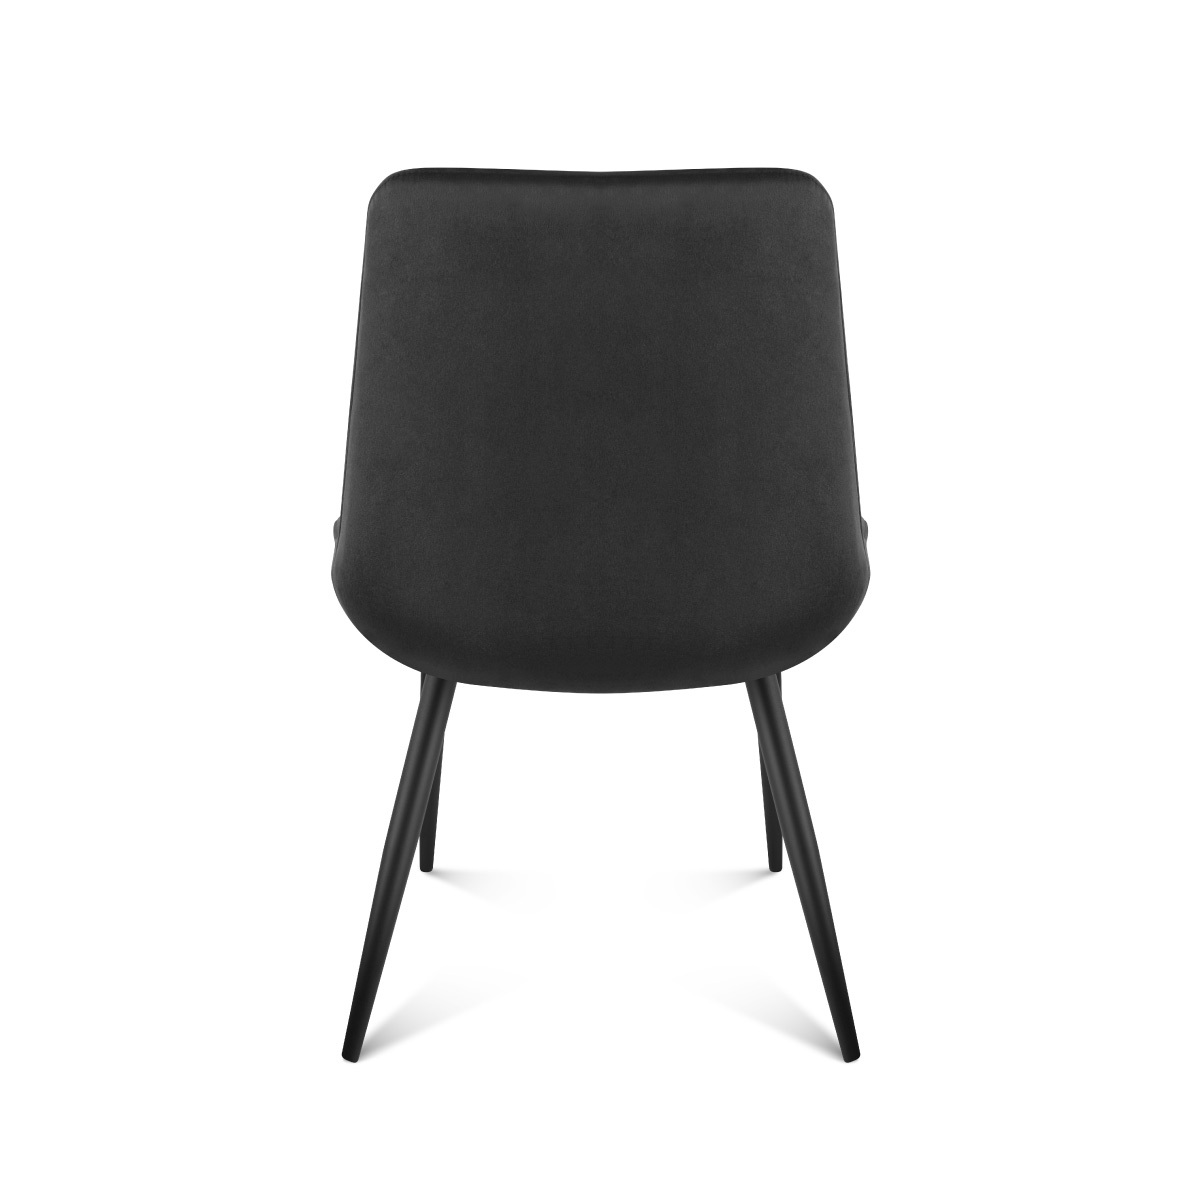 Tył krzesła Mark Adler Prince 3.0 Black